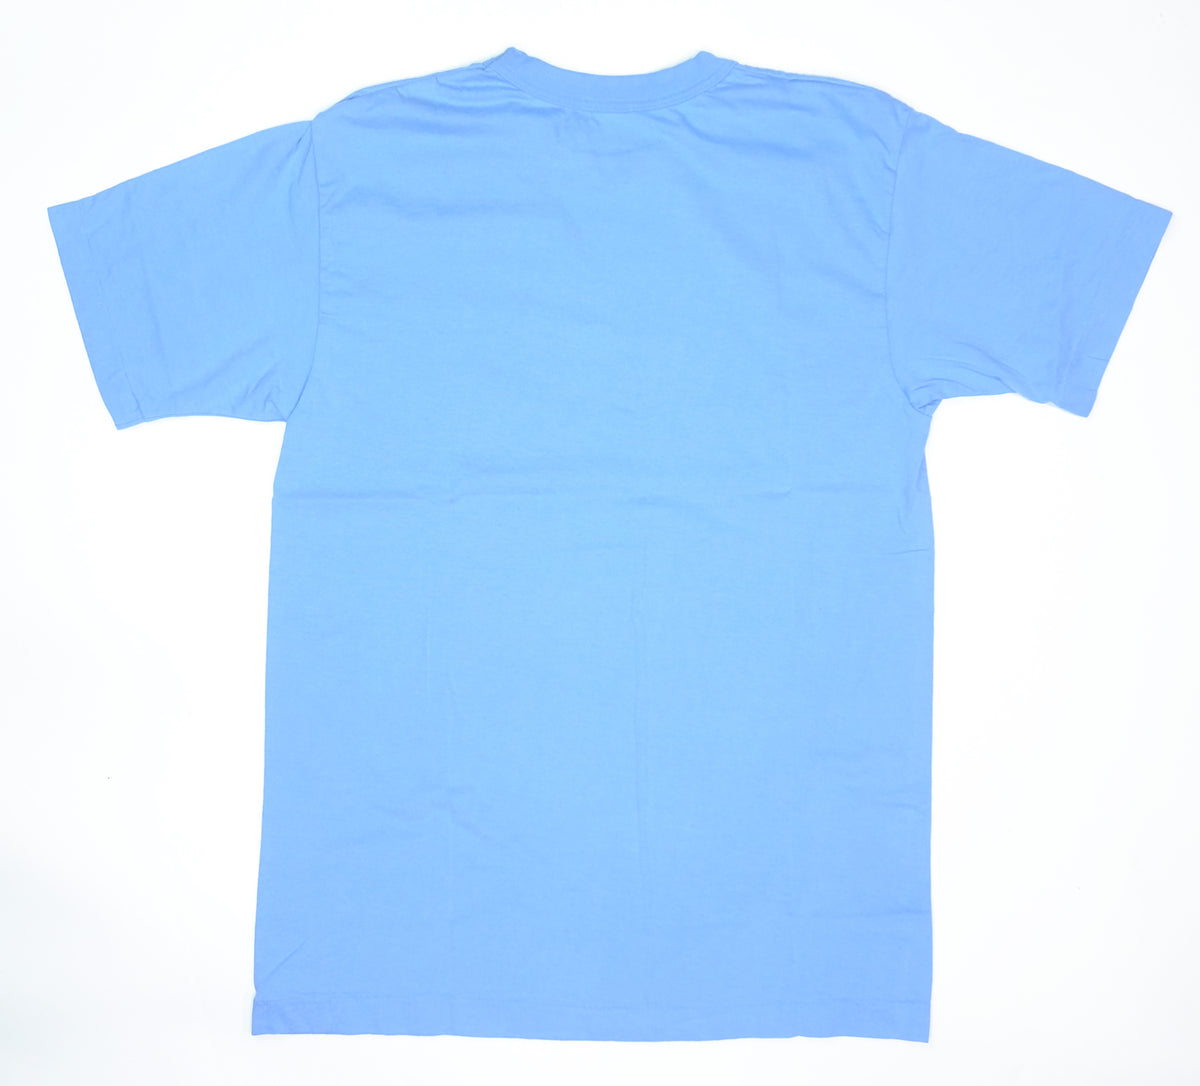 Utilitees 5.5oz Loopwheel Crew Neck T-Shirt Light Blue ( Iron heart )